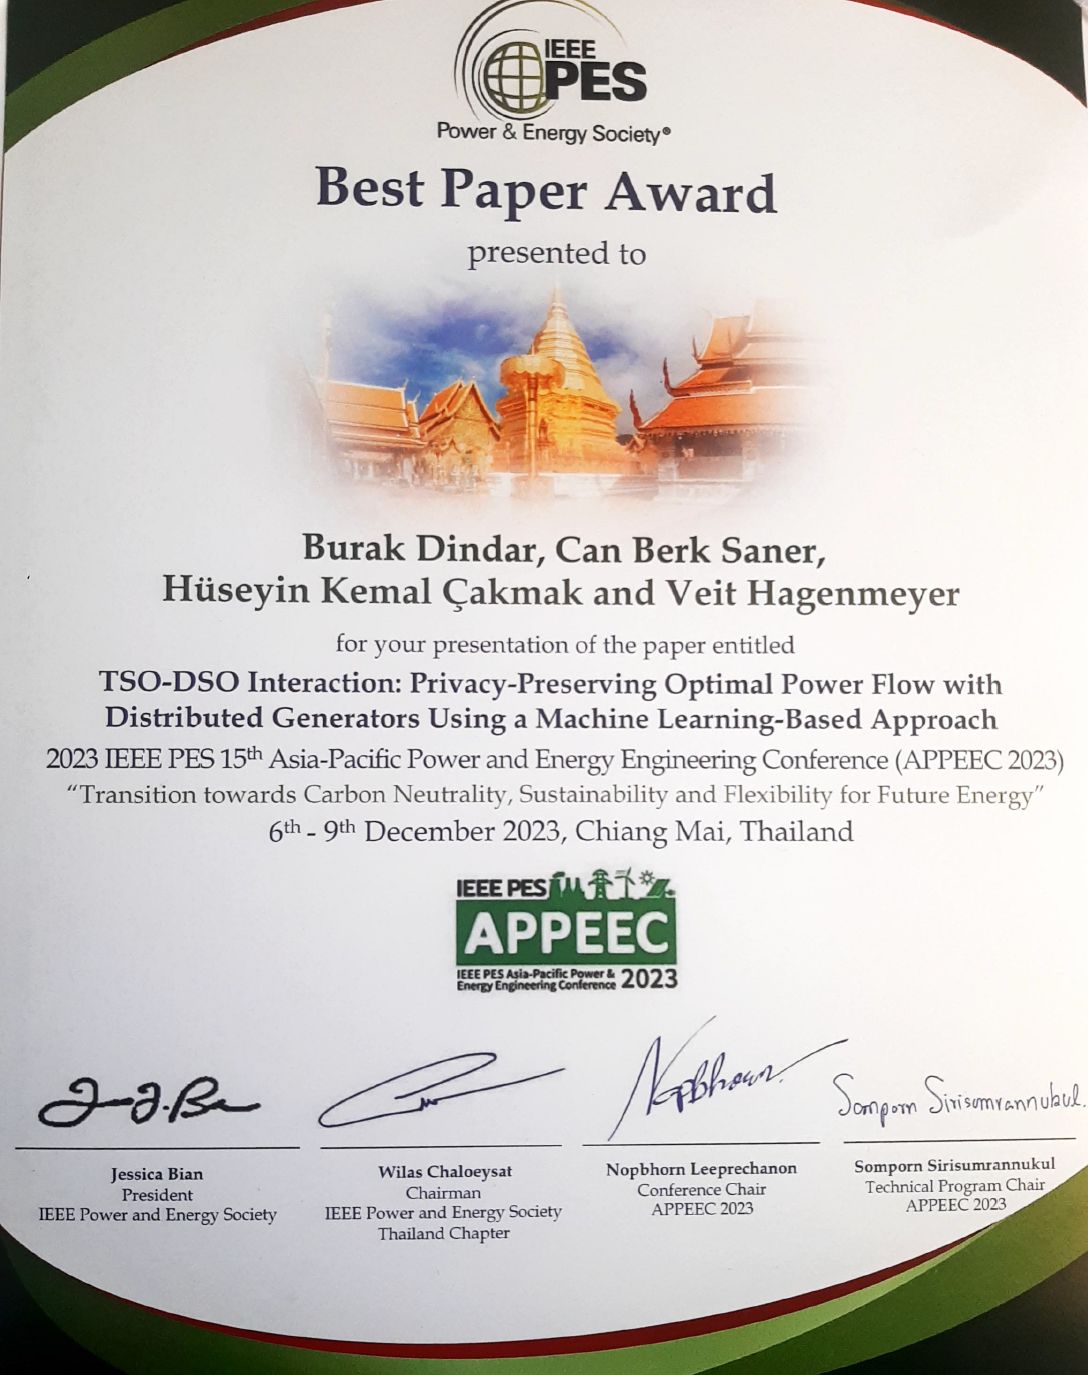 Best Paper Award (APPEEC 2023)